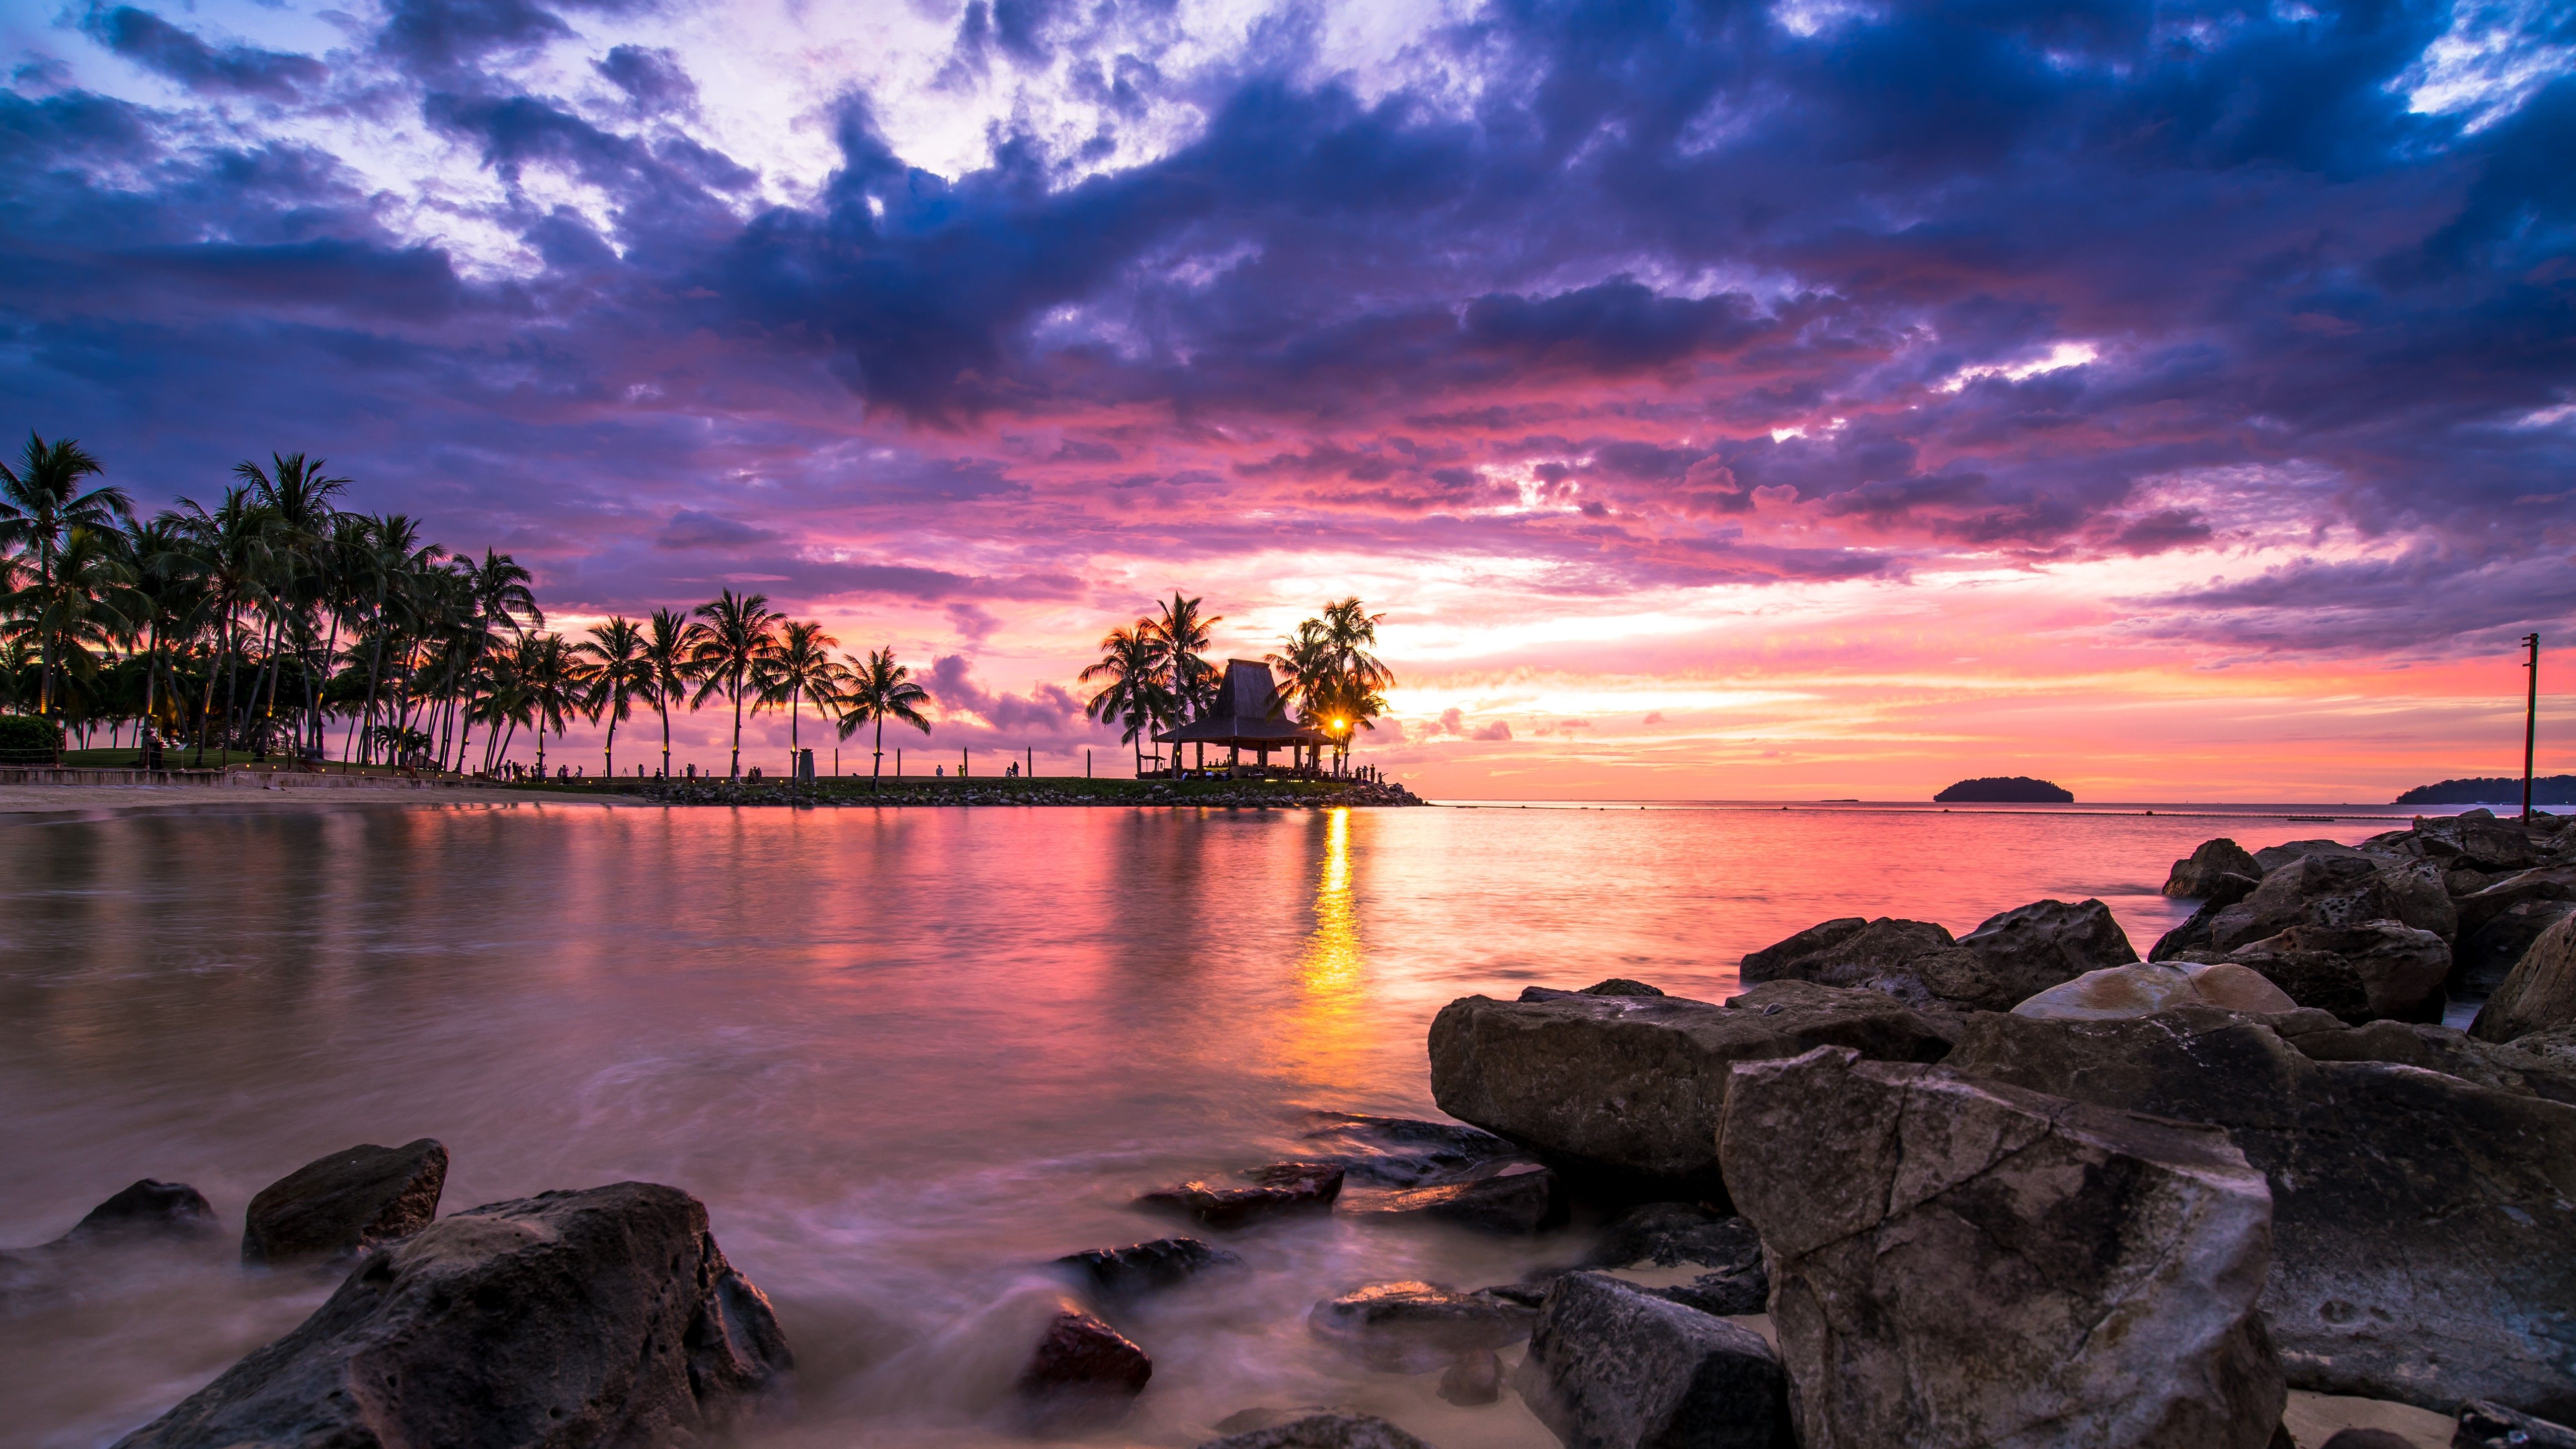 A Beautiful Sunset by the Beach Nature Landscape 4K Wallpaper